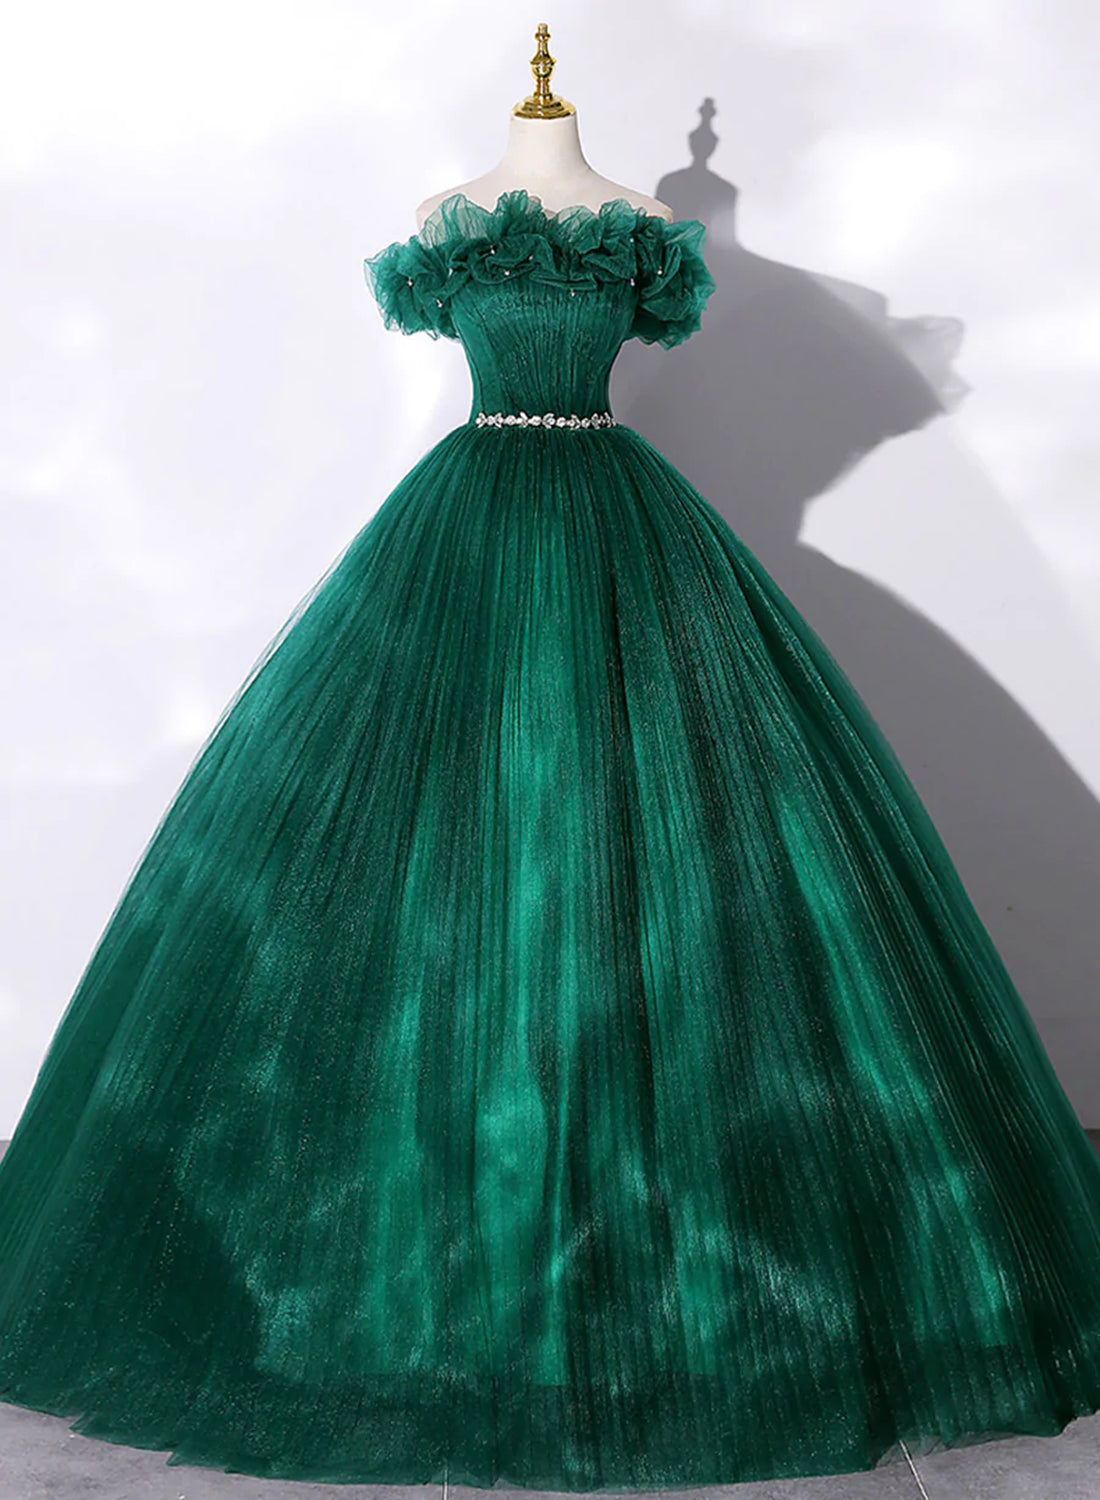 Green Tulle Beaded Waist Corset Ball Gown Sweet 16 Dress, Off Shoulder Green Corset Prom Dress outfits, Prom Dress Ideas